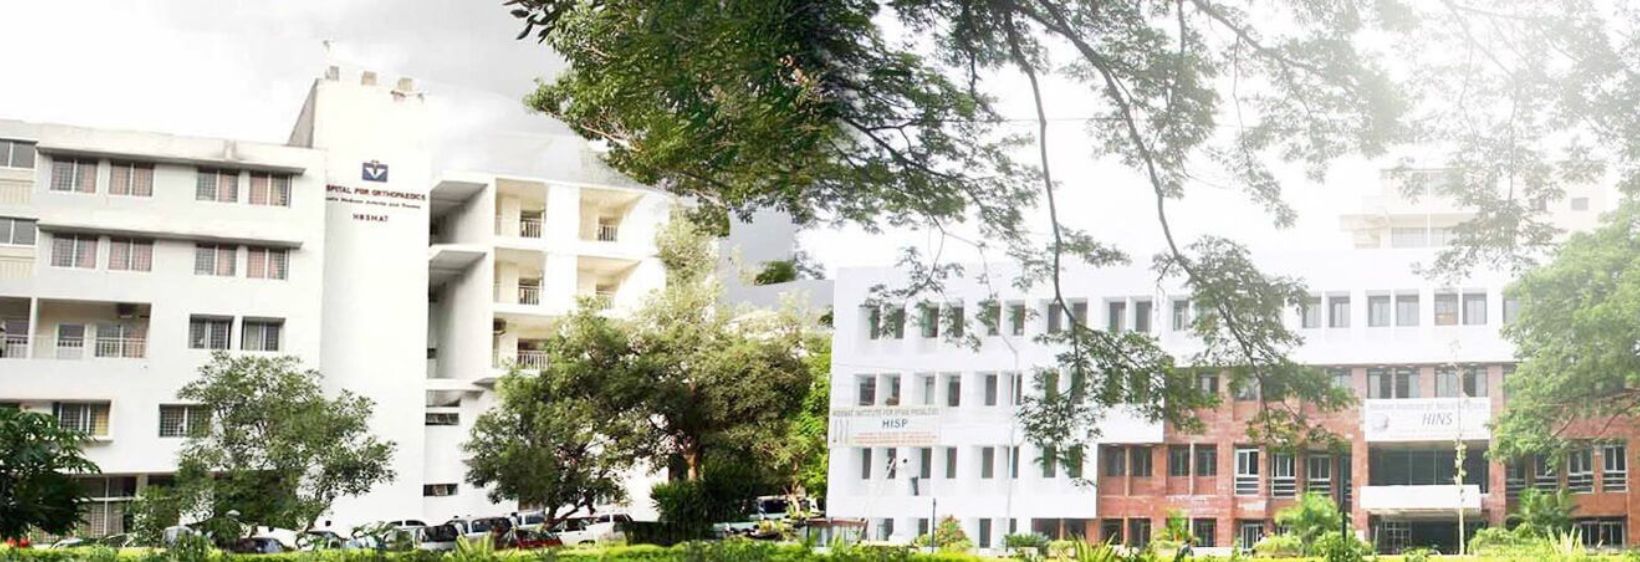 Hosmat College of Nursing - Bangalore